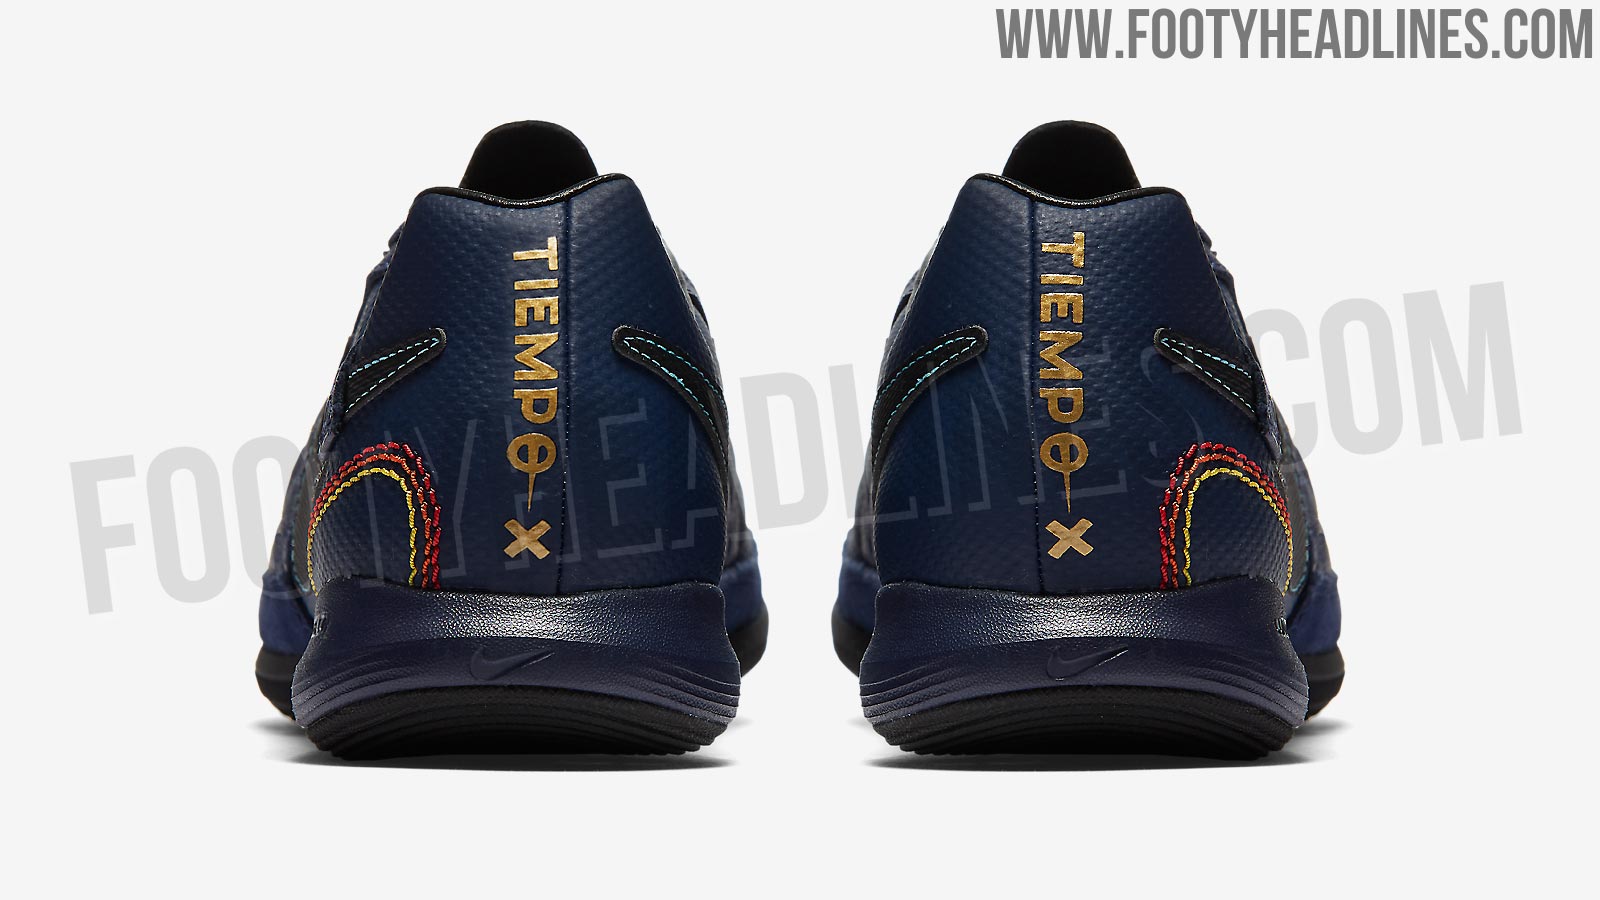 Navy Nike TiempoX Finale Ronaldinho 'Porto Alegre' Indoor and Turf Boots Leaked Footy Headlines